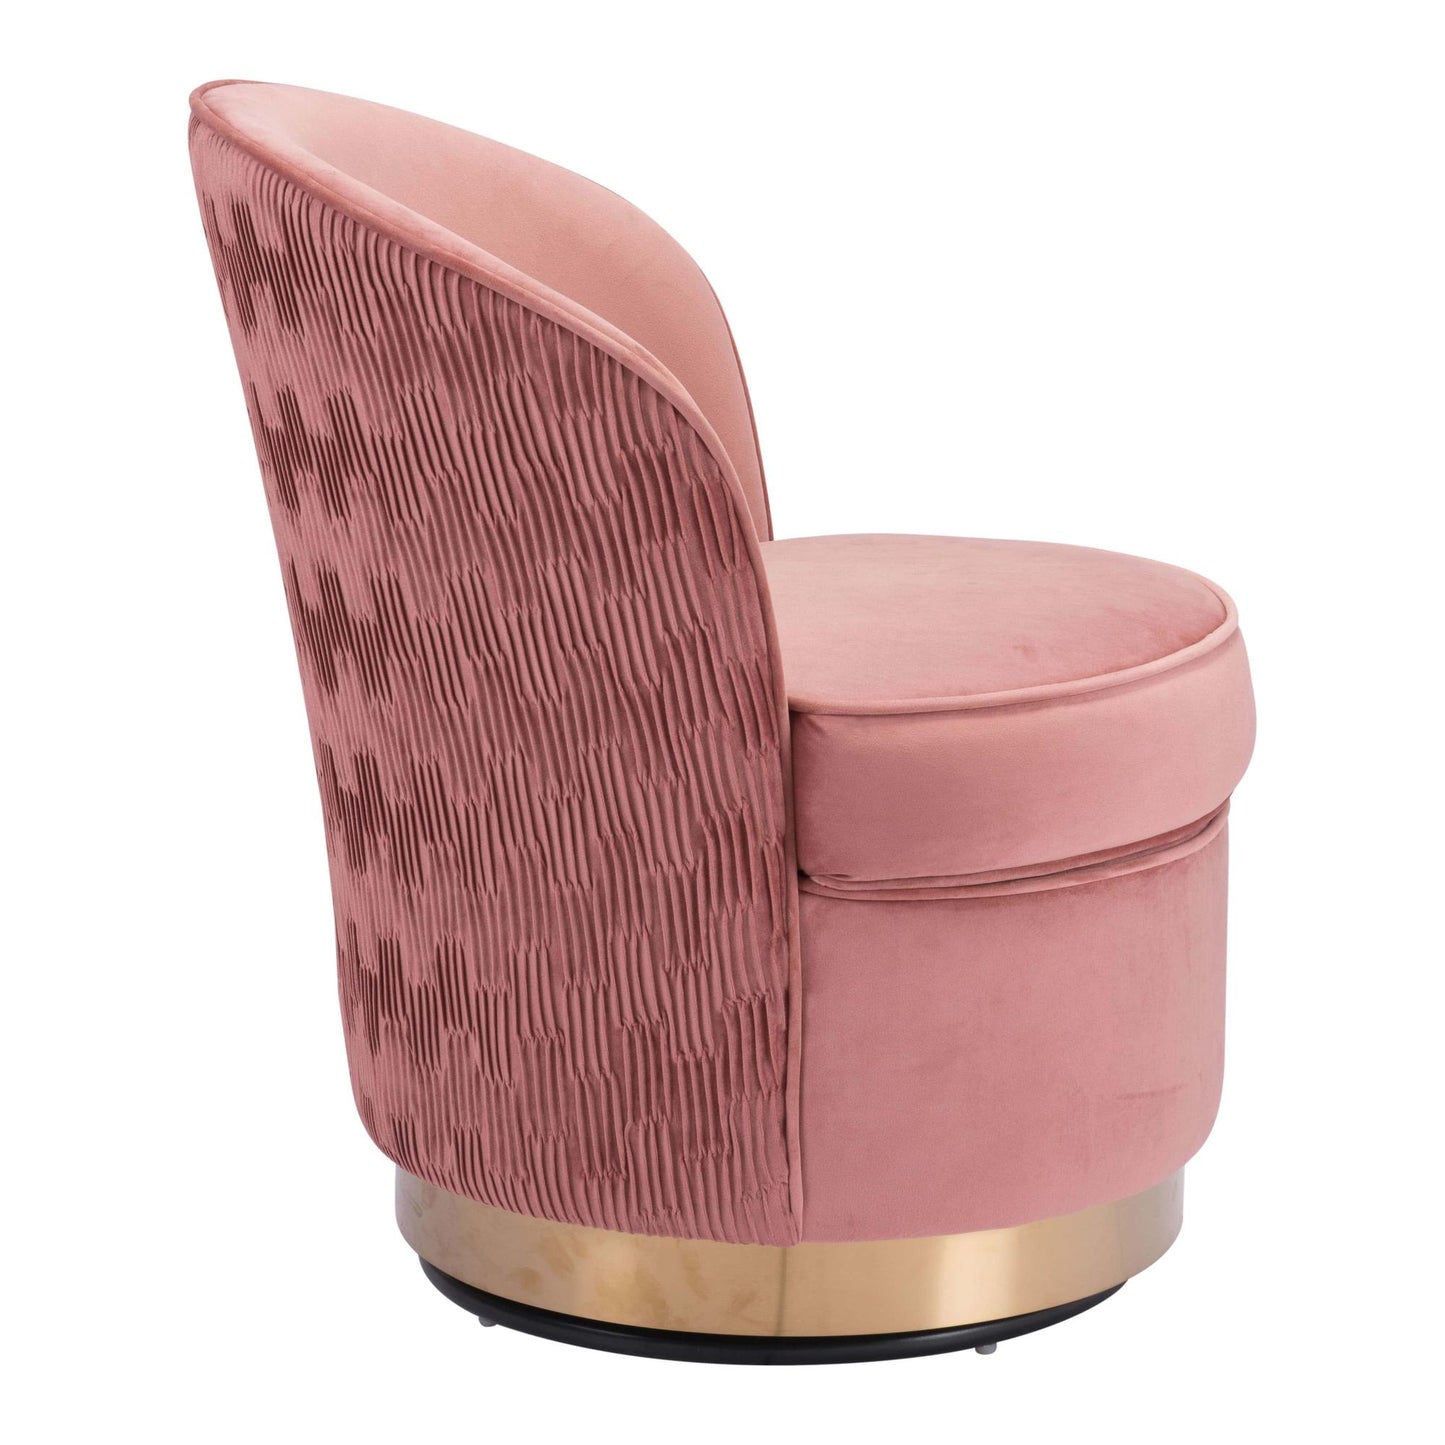 Zelda Accent Chair in Pink